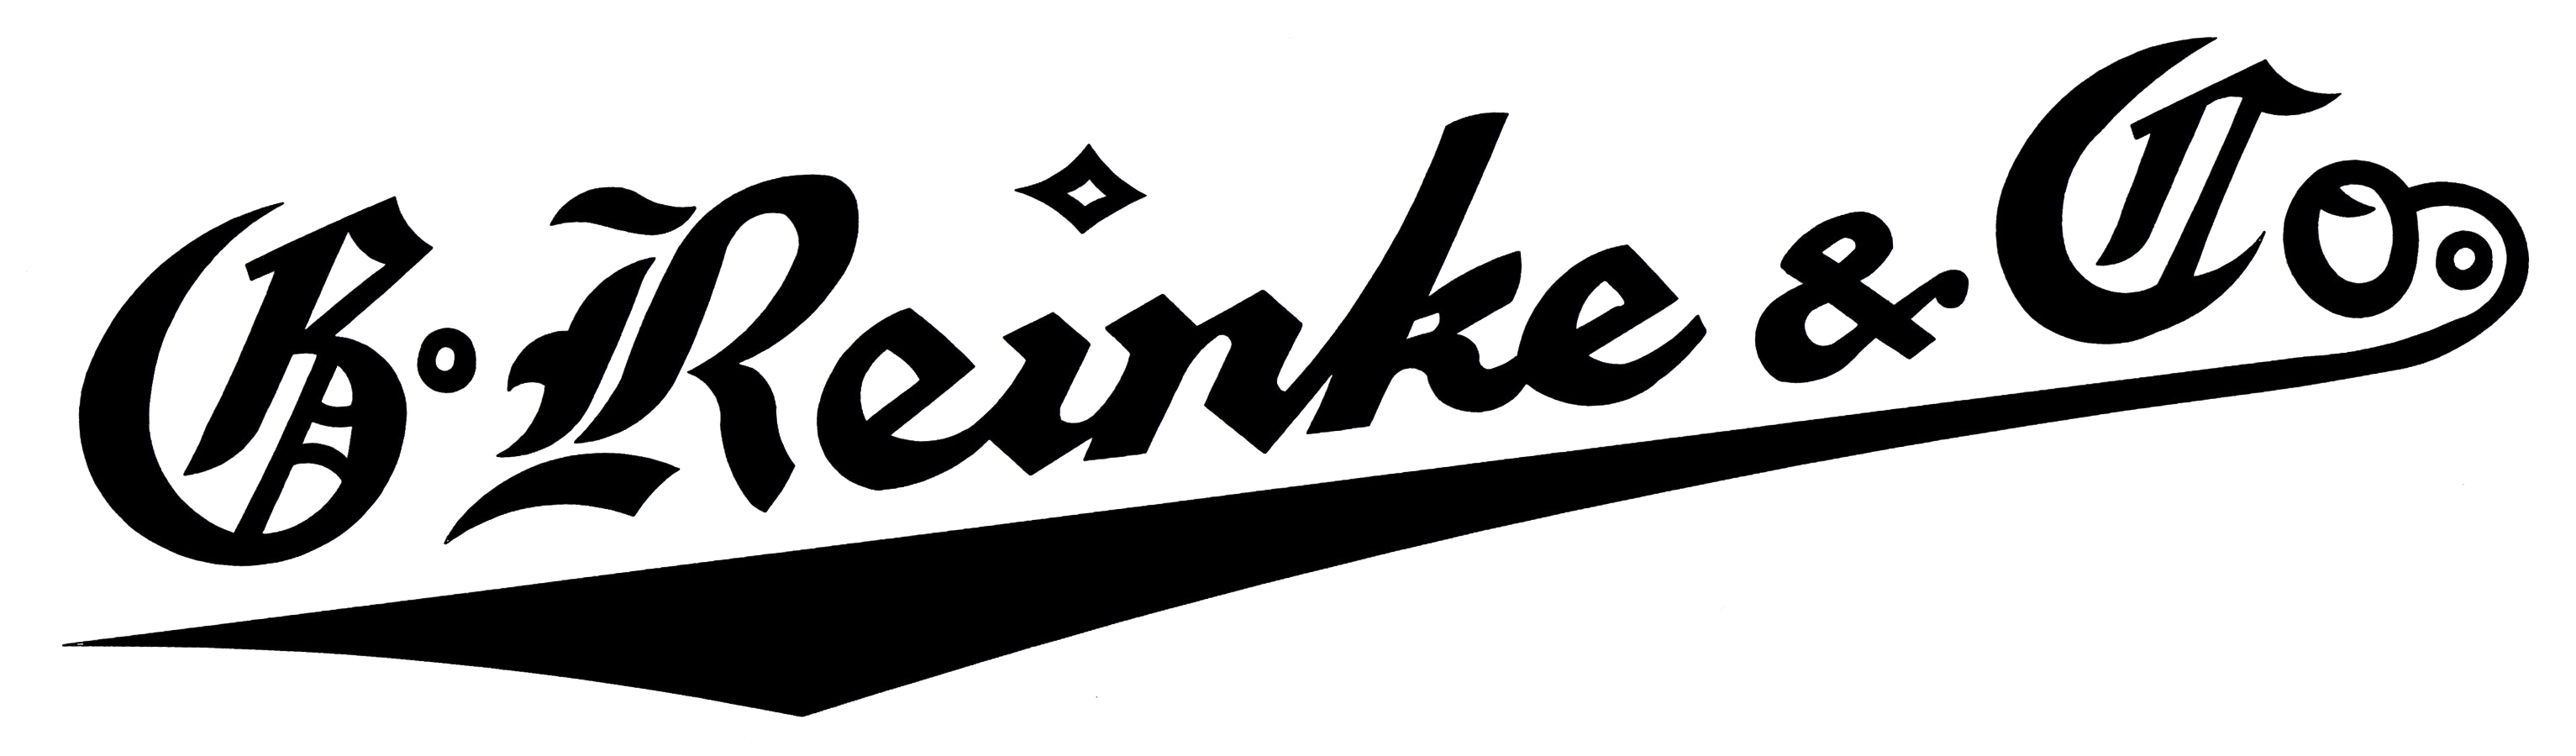 Reinke Logo - Monument Business in Oshkosh, WI. G. Reinke & Company Monuments